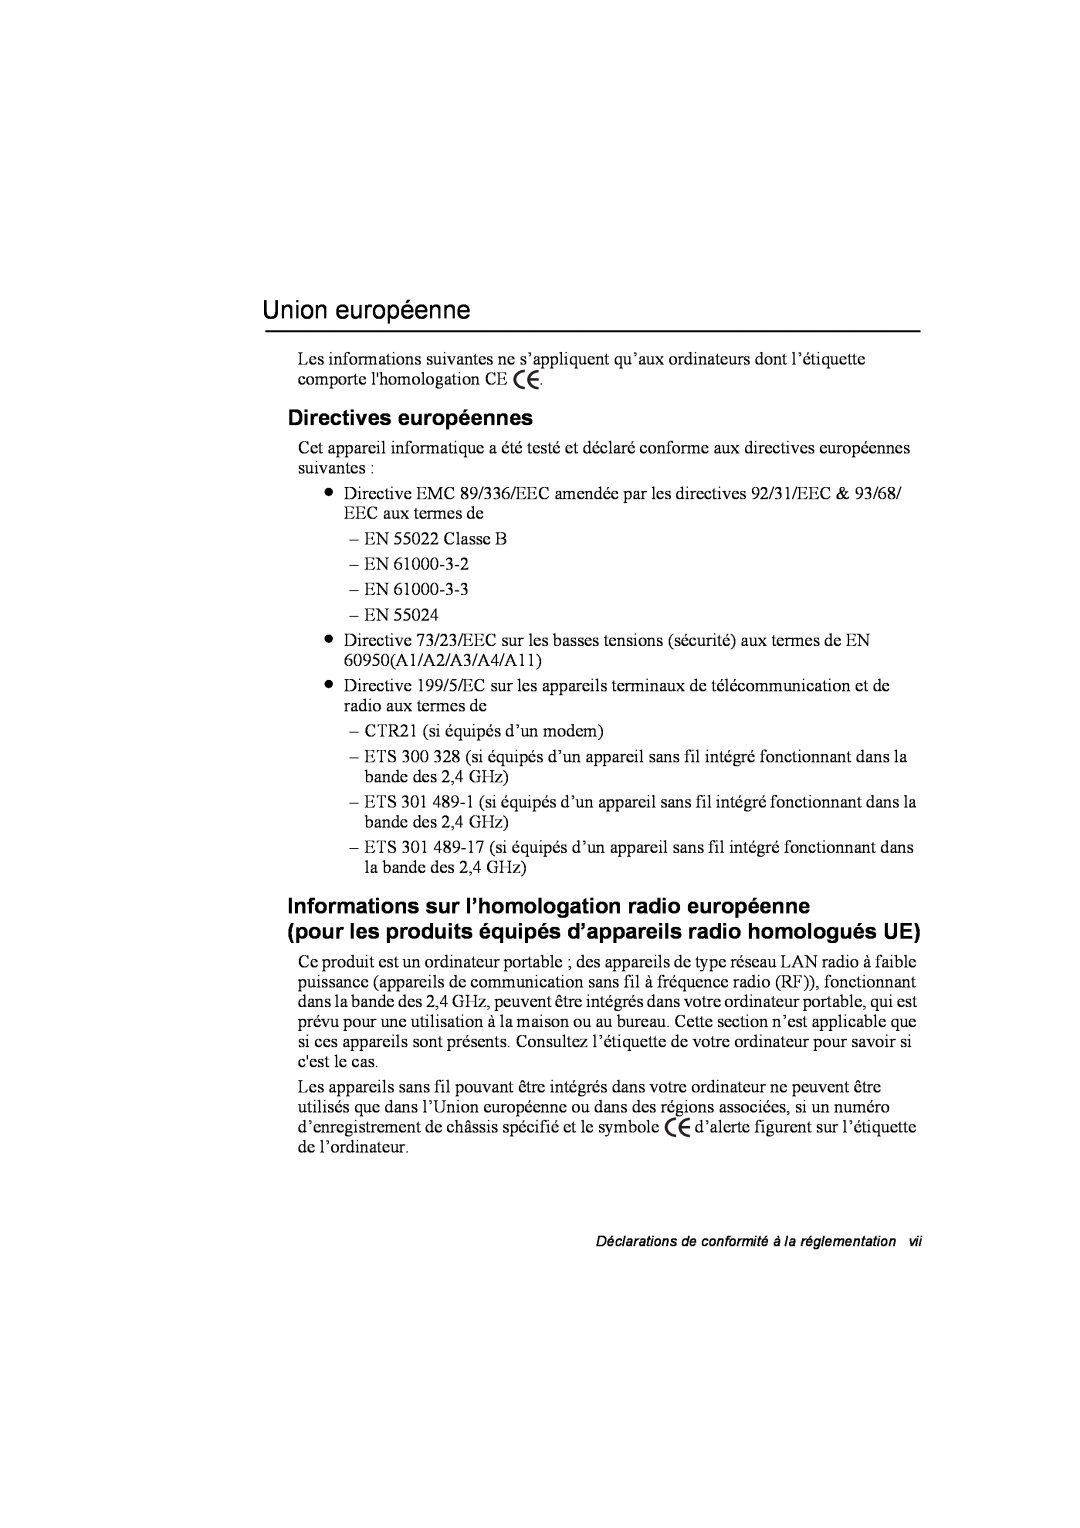 Samsung NP10FK00EW/SEF manual Union européenne, Directives européennes, Informations sur l’homologation radio européenne 